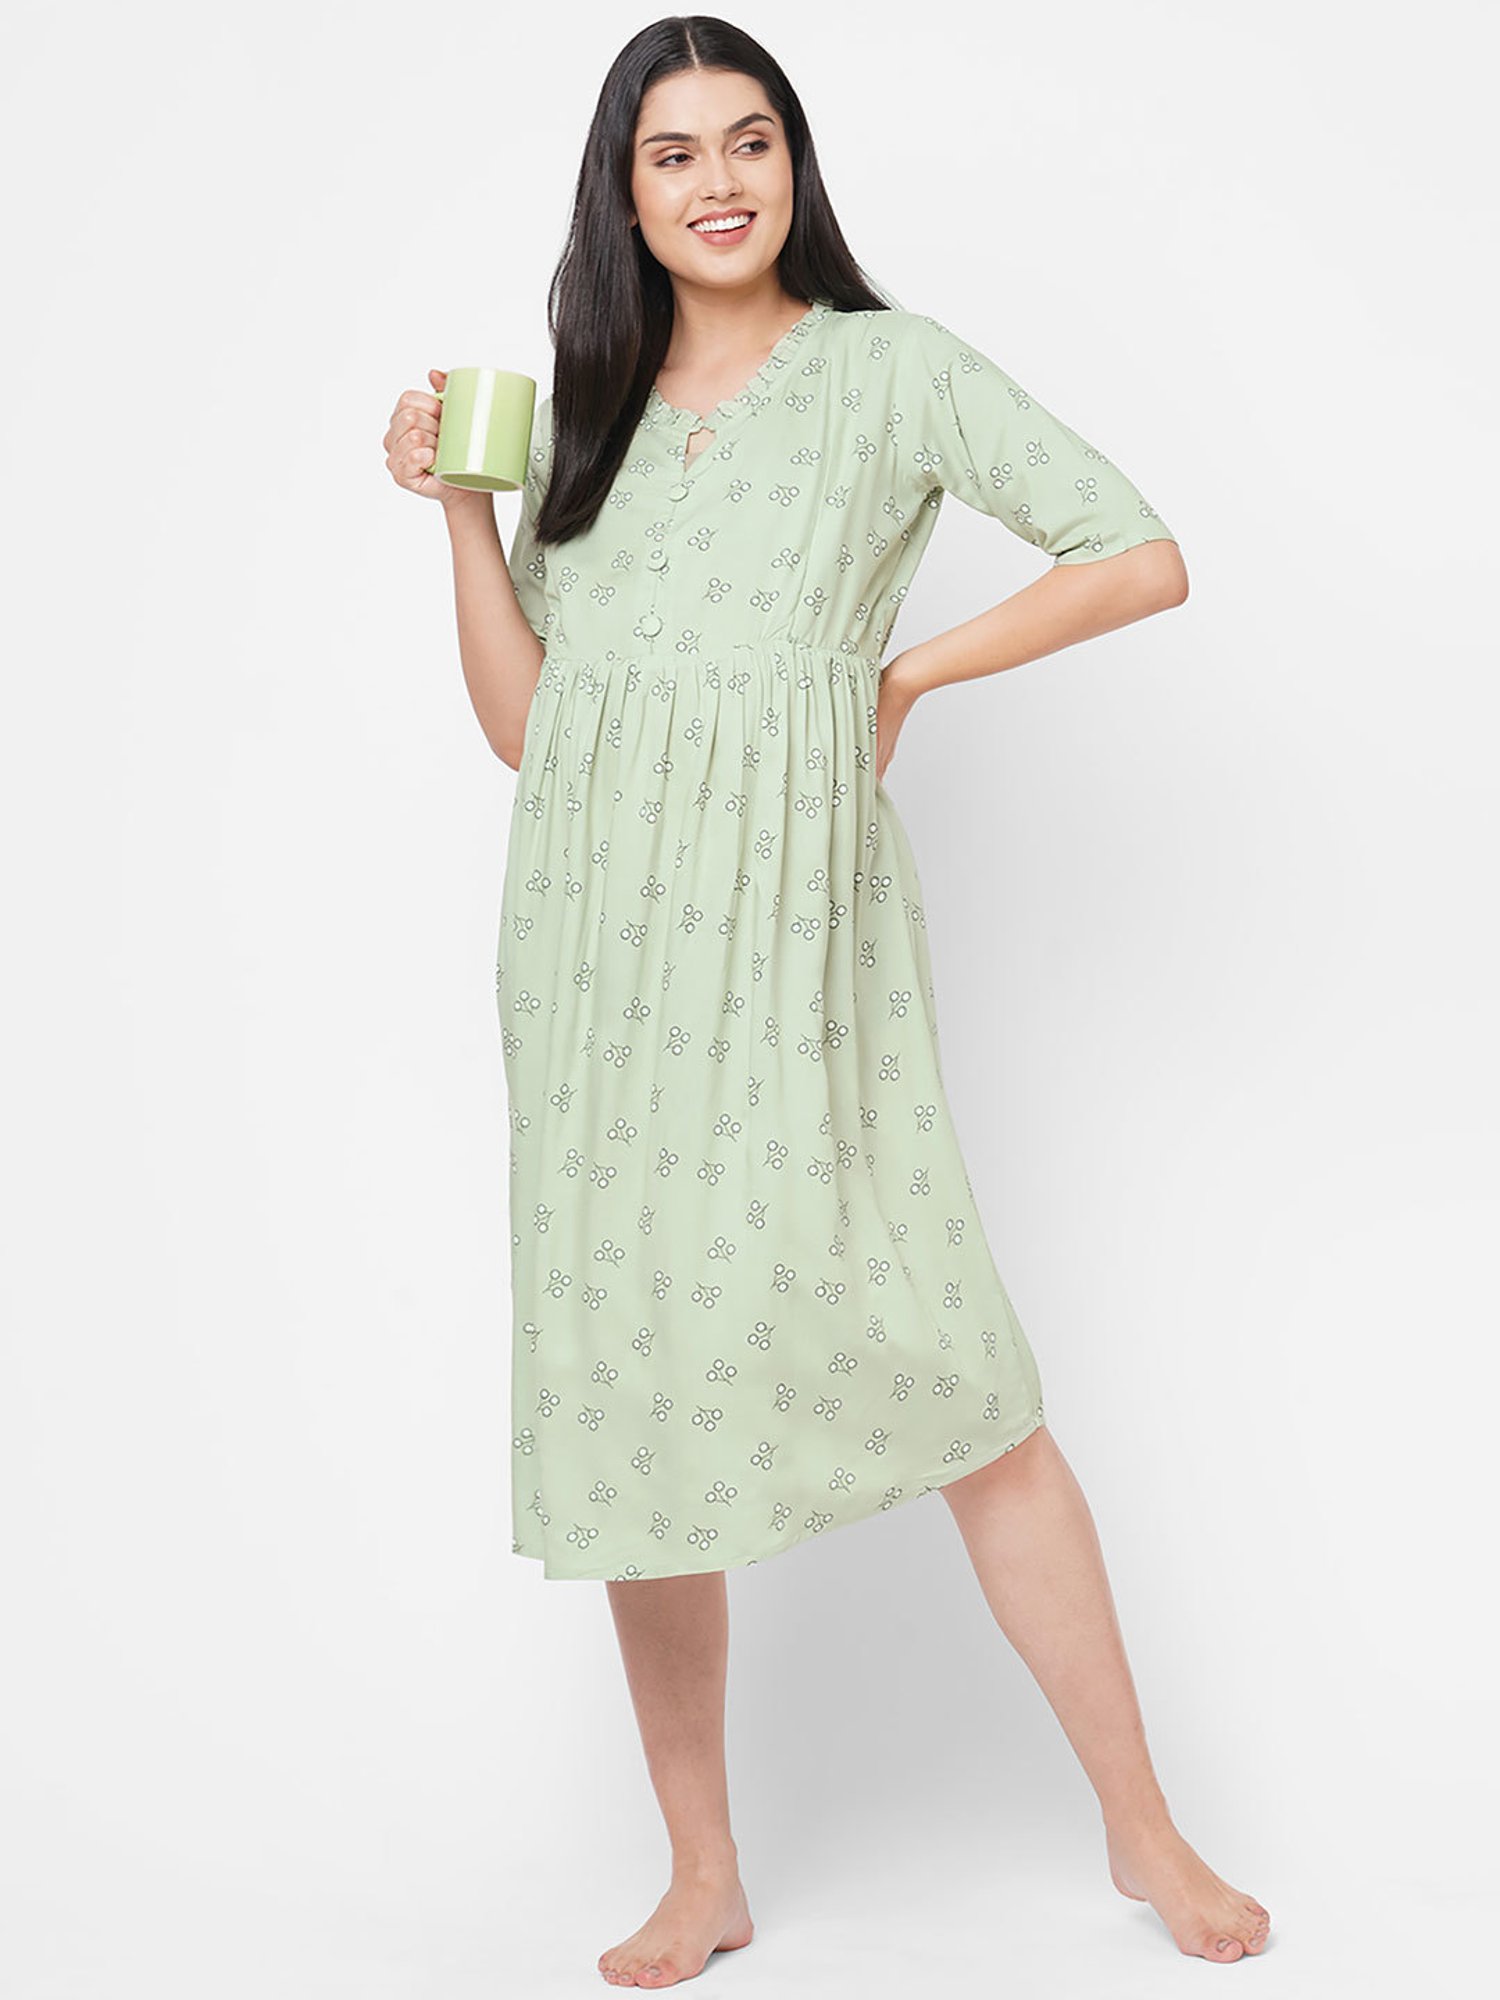 100% Cotton Maternity Nursing Night Dress Spring Autumn Sleepwear Clothes  for Pregnant Women Pregnancy Feeding